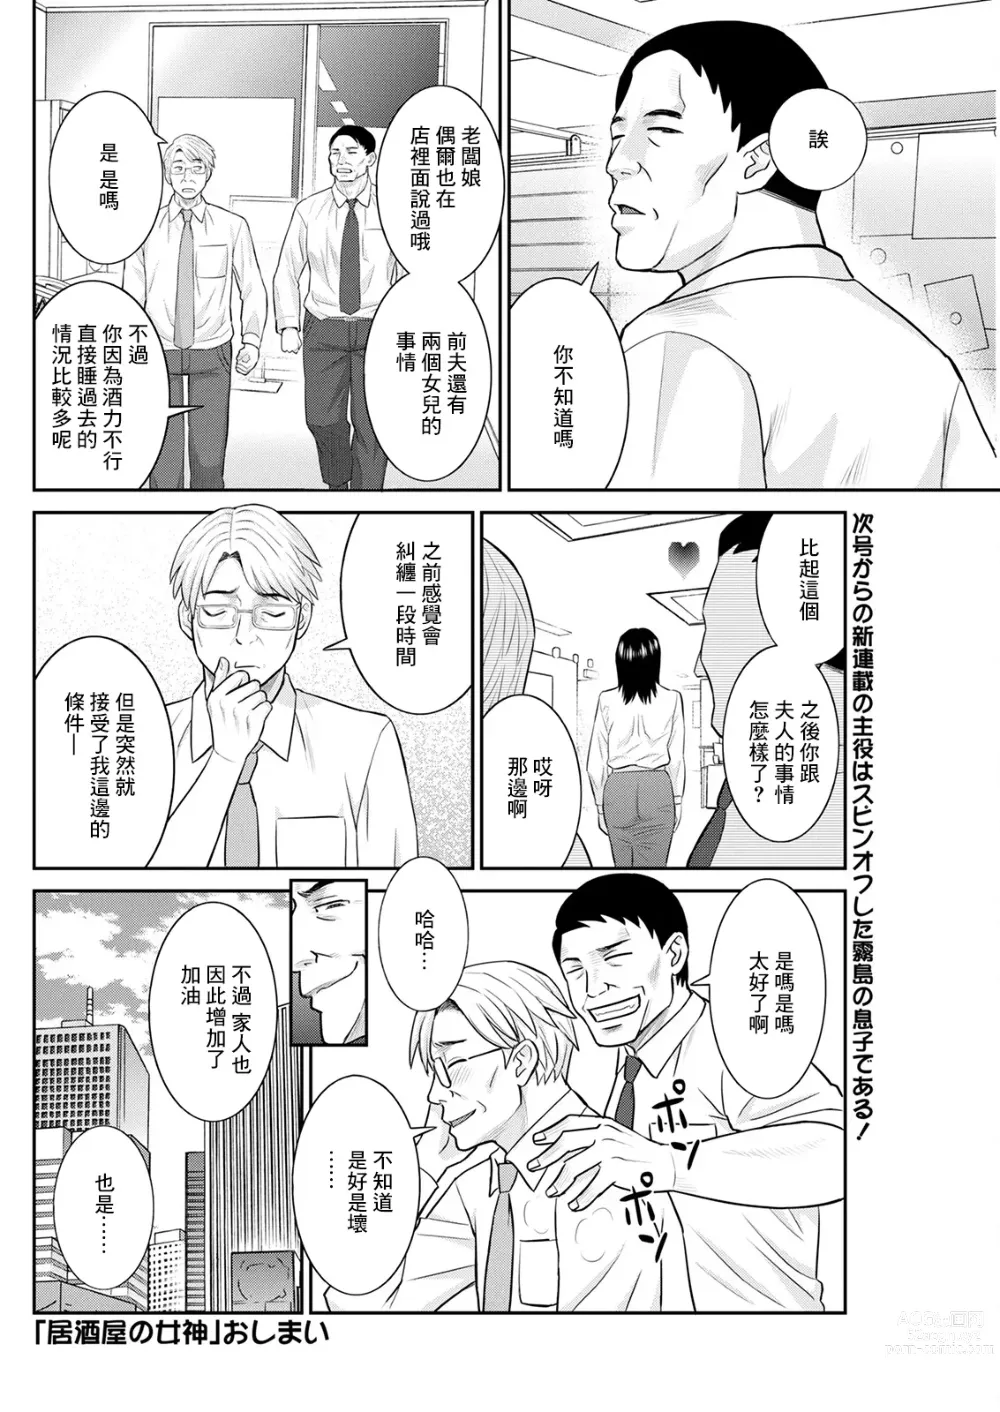 Page 18 of manga Izakaya no Megami Kouhen